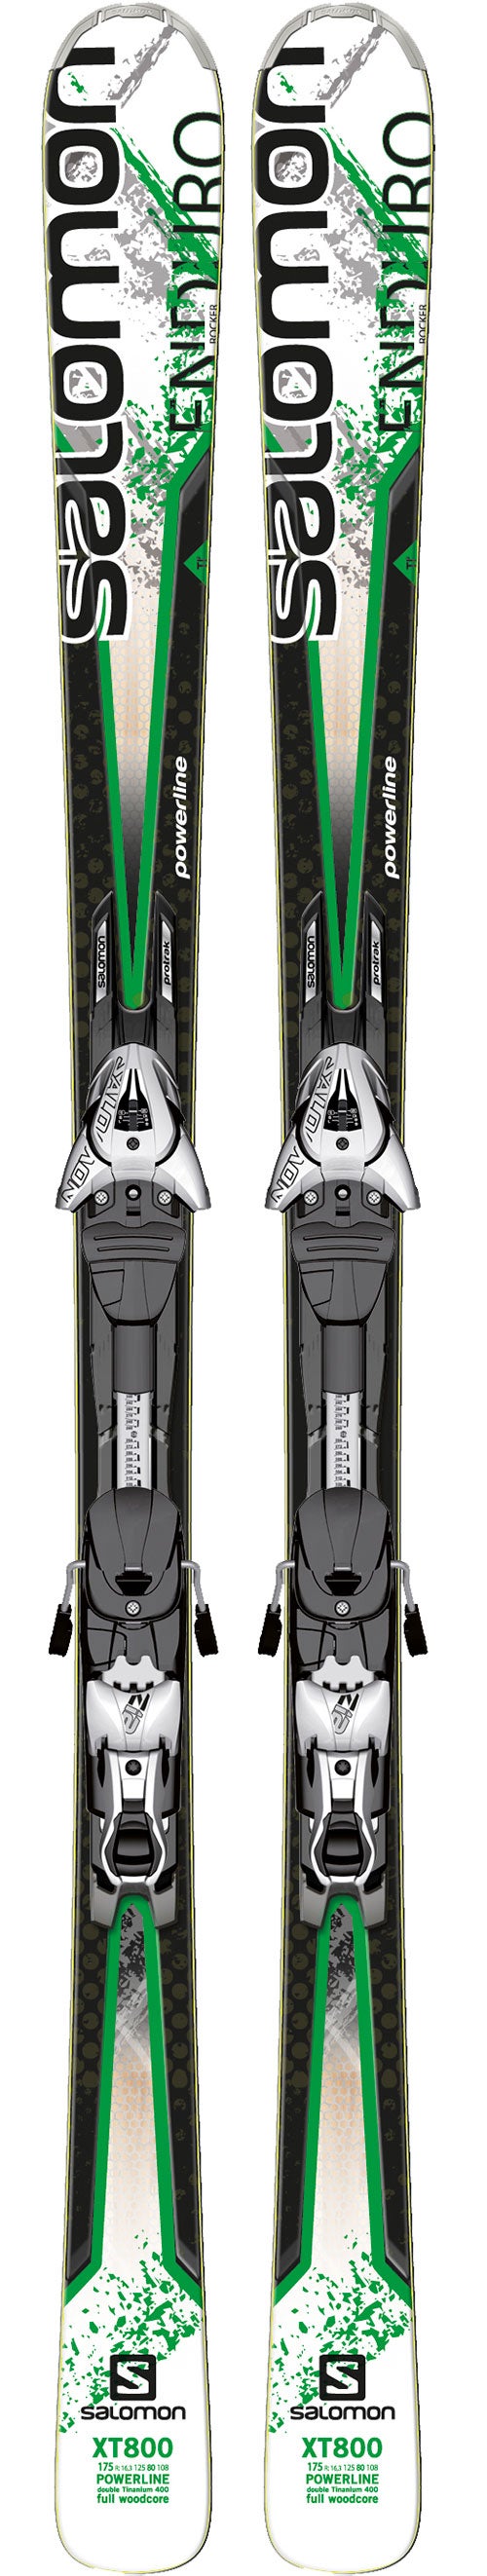 Salomon Enduro XT 800 (2014) - Ski